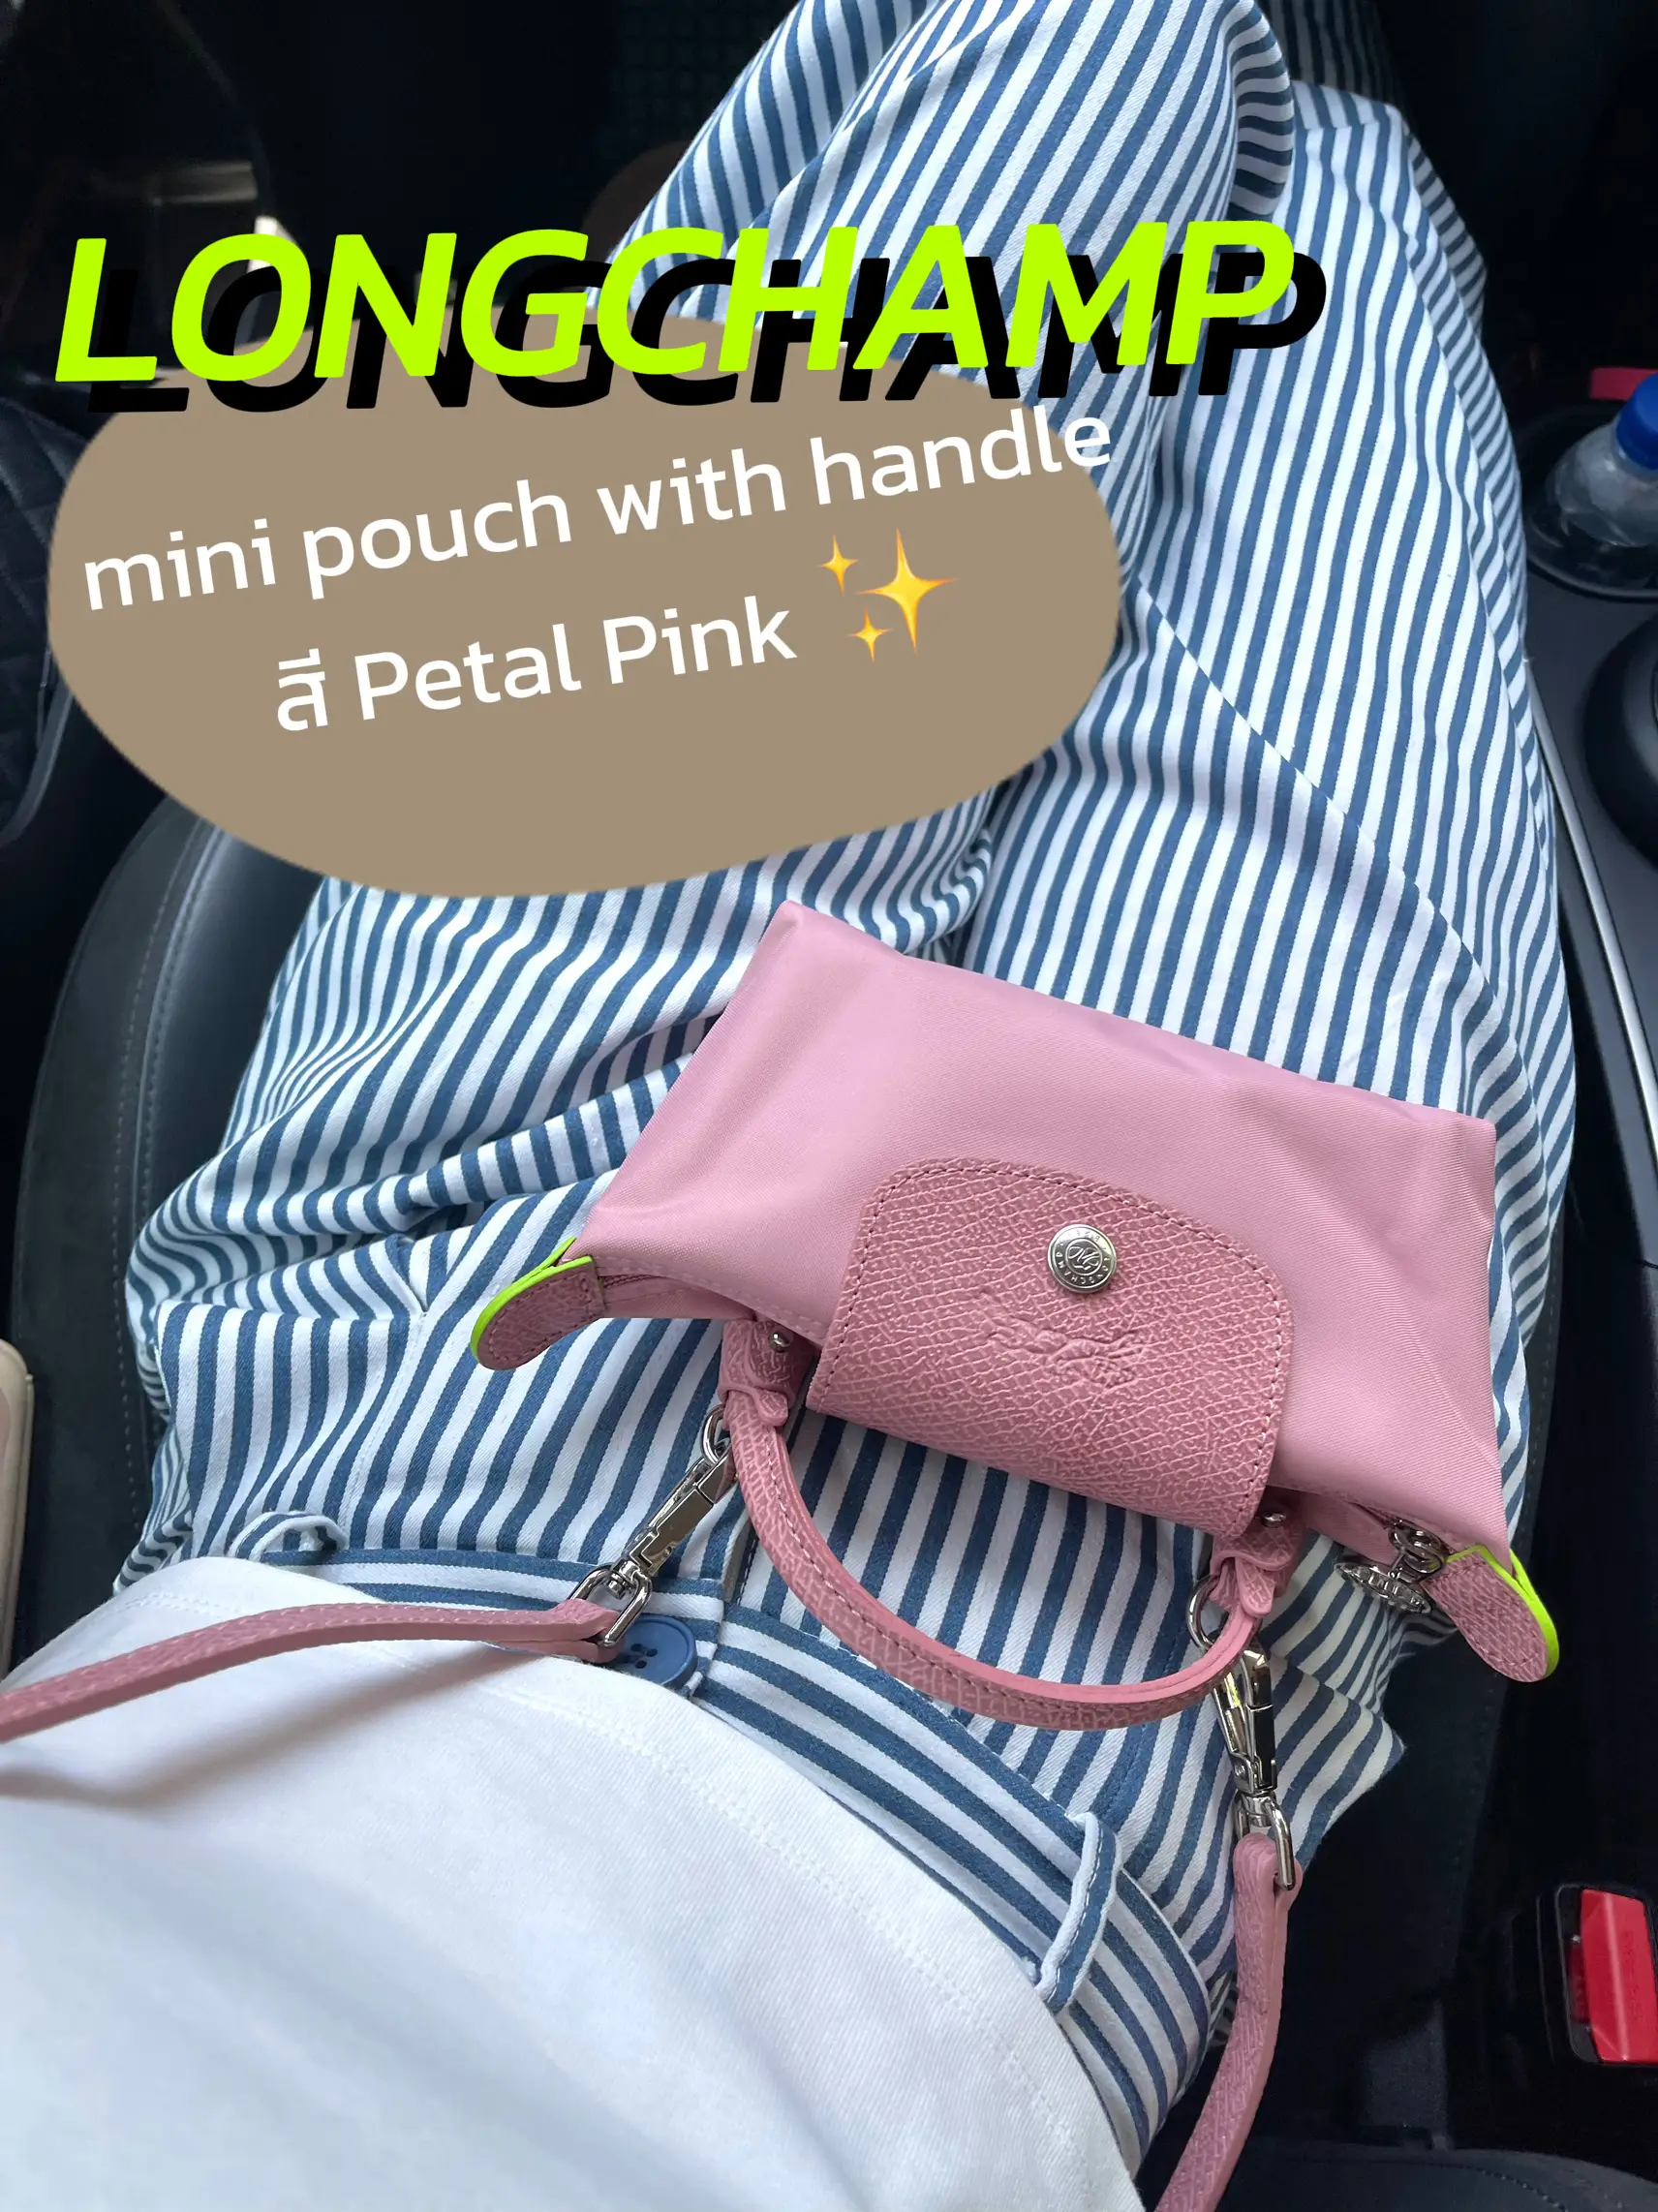 Longchamp - mini pouch with handleสี Petal Pink ✨💓